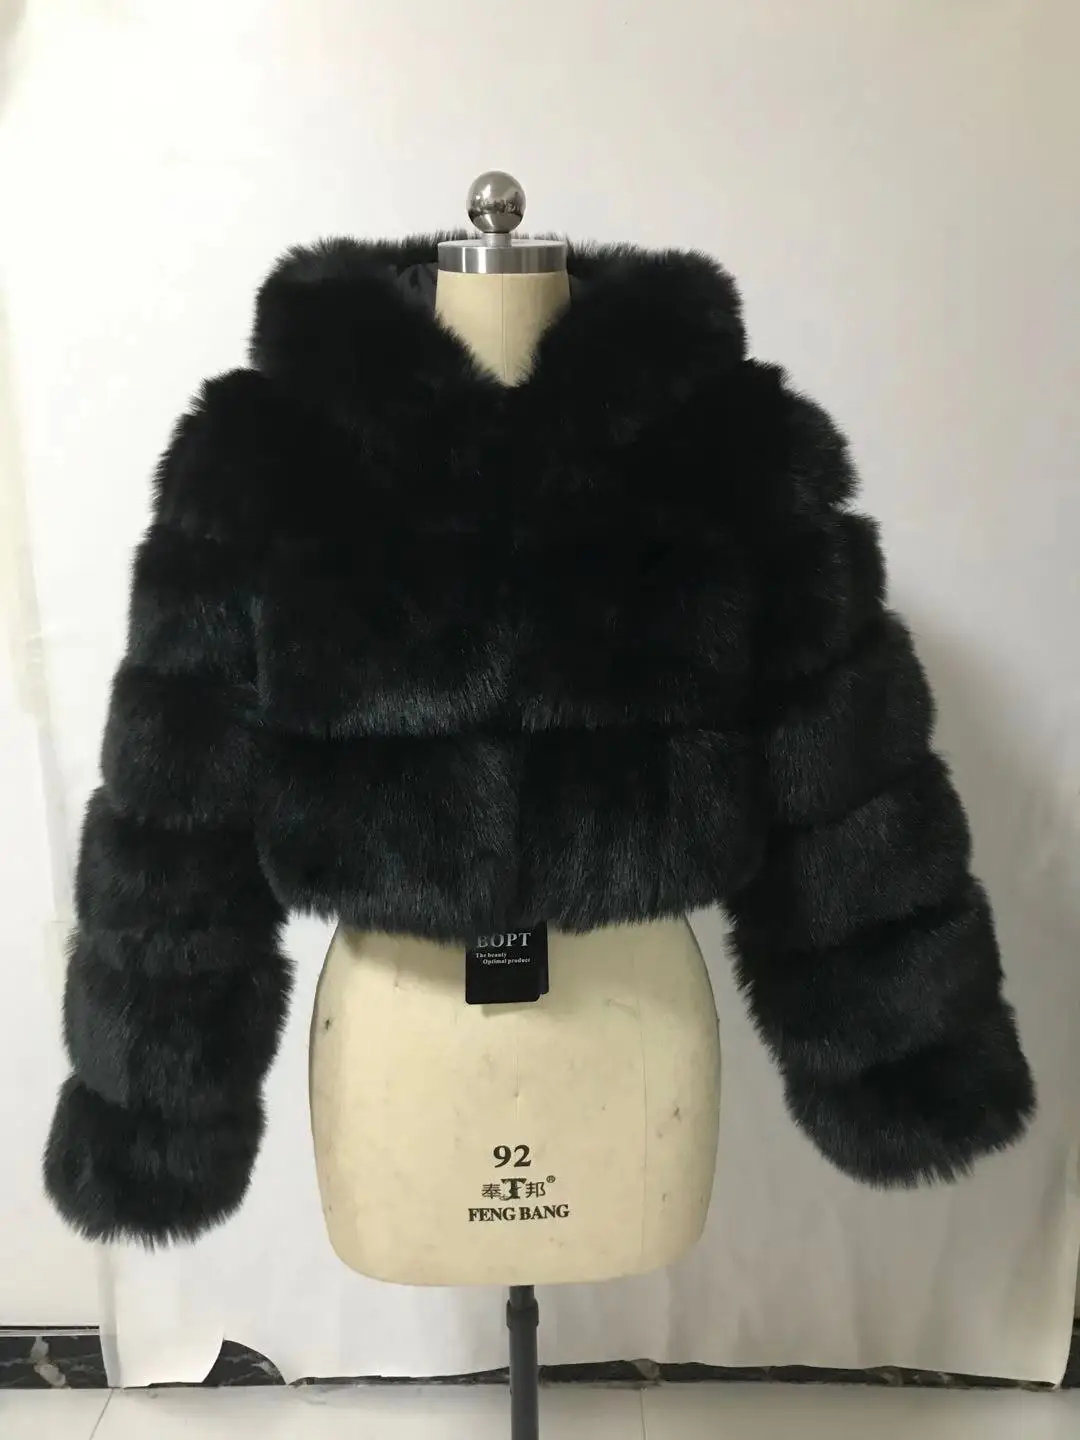 Spring Autumn Winter Women Short Style Fashion Faux Fox Fur Coat with Hood Jacket Model puffer coat with hood Coats & Jackets